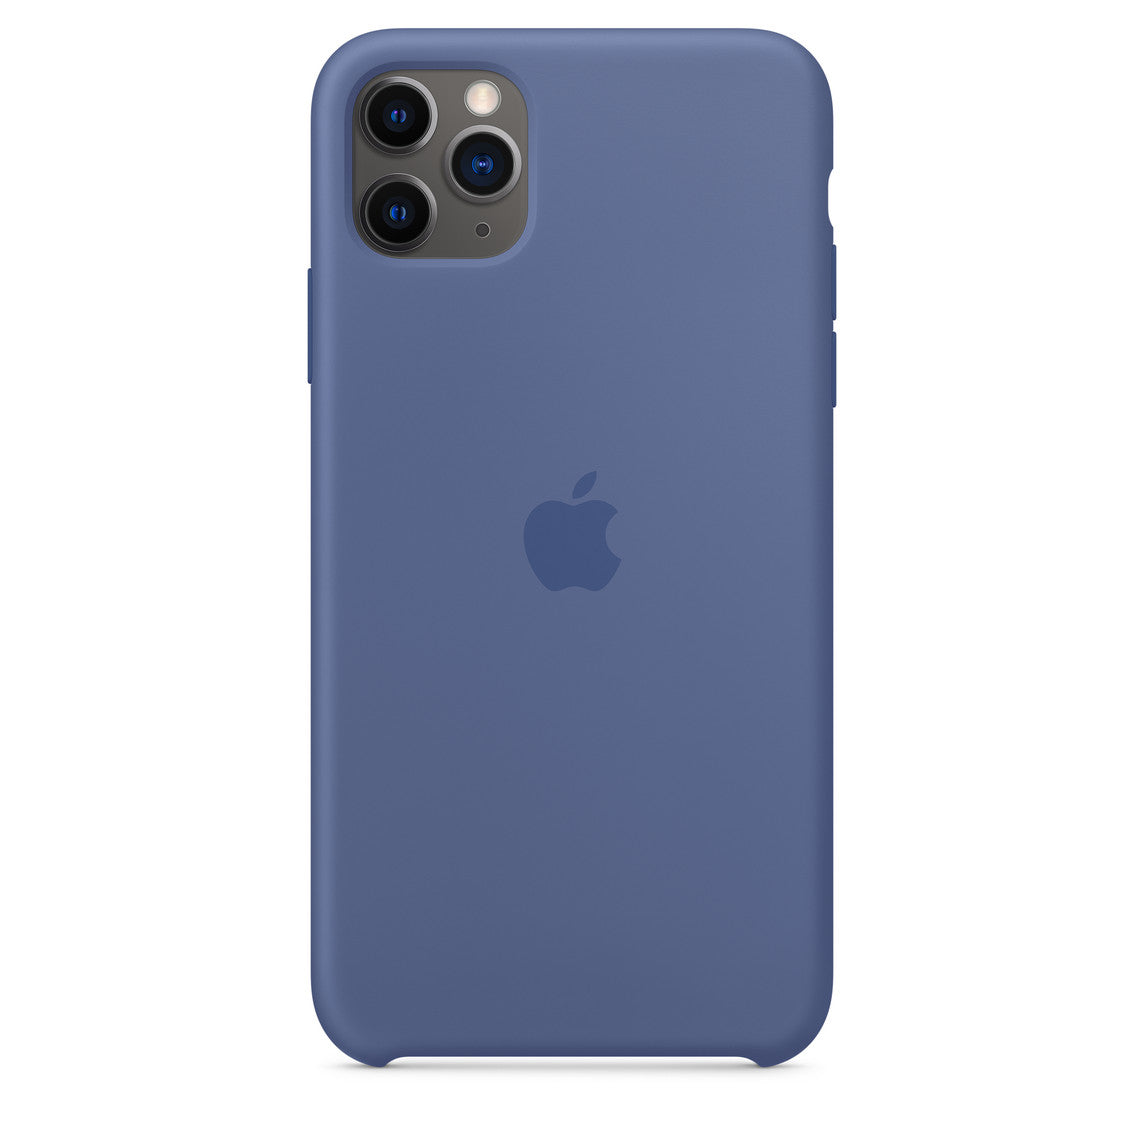 Apple iPhone 11 Pro Max 64GB Space Grau Fair Ohne Vertrag mit Apple iPhone 11 Pro Max Silikonhülle – Leinen blau